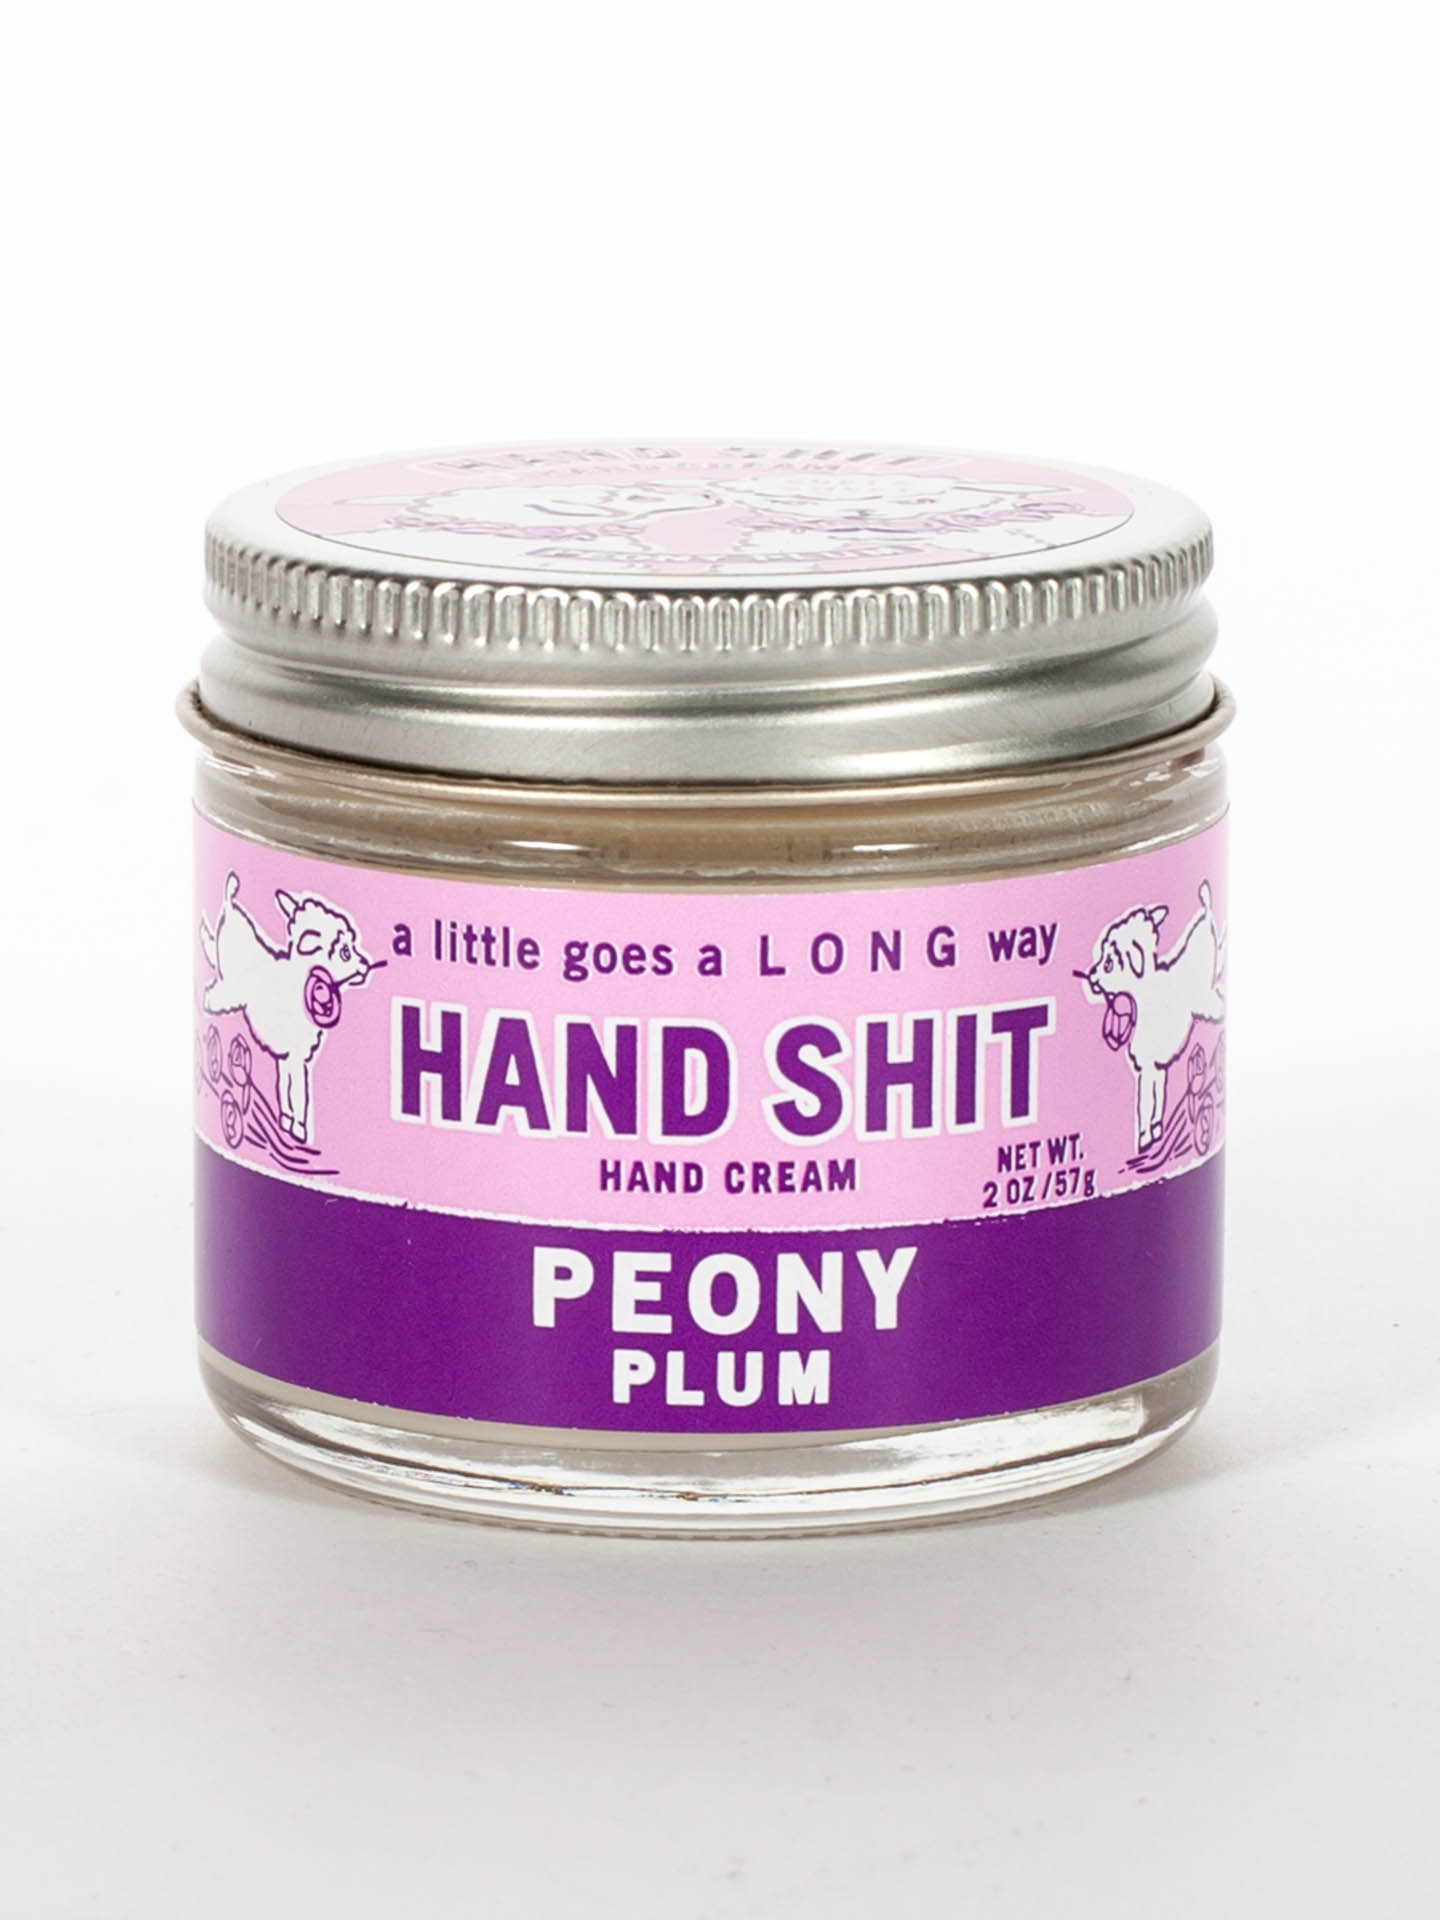 Hand Shit Peony Plum